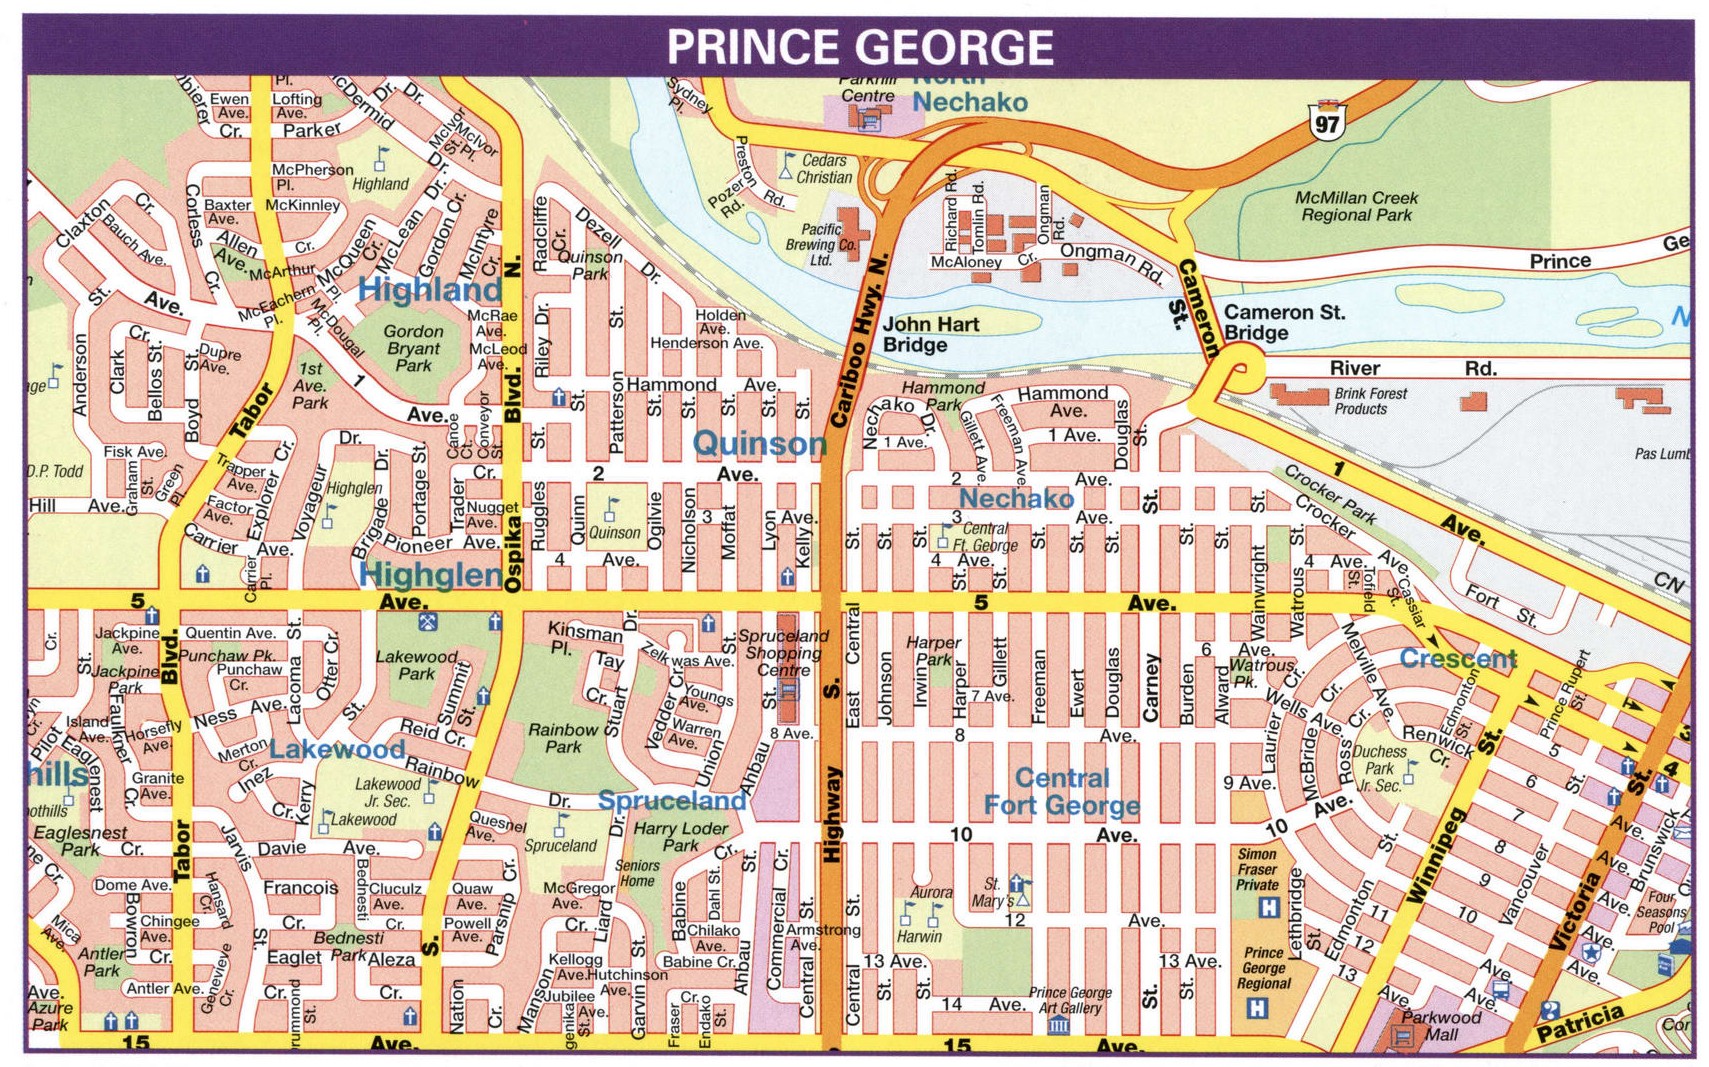 Prince George road map